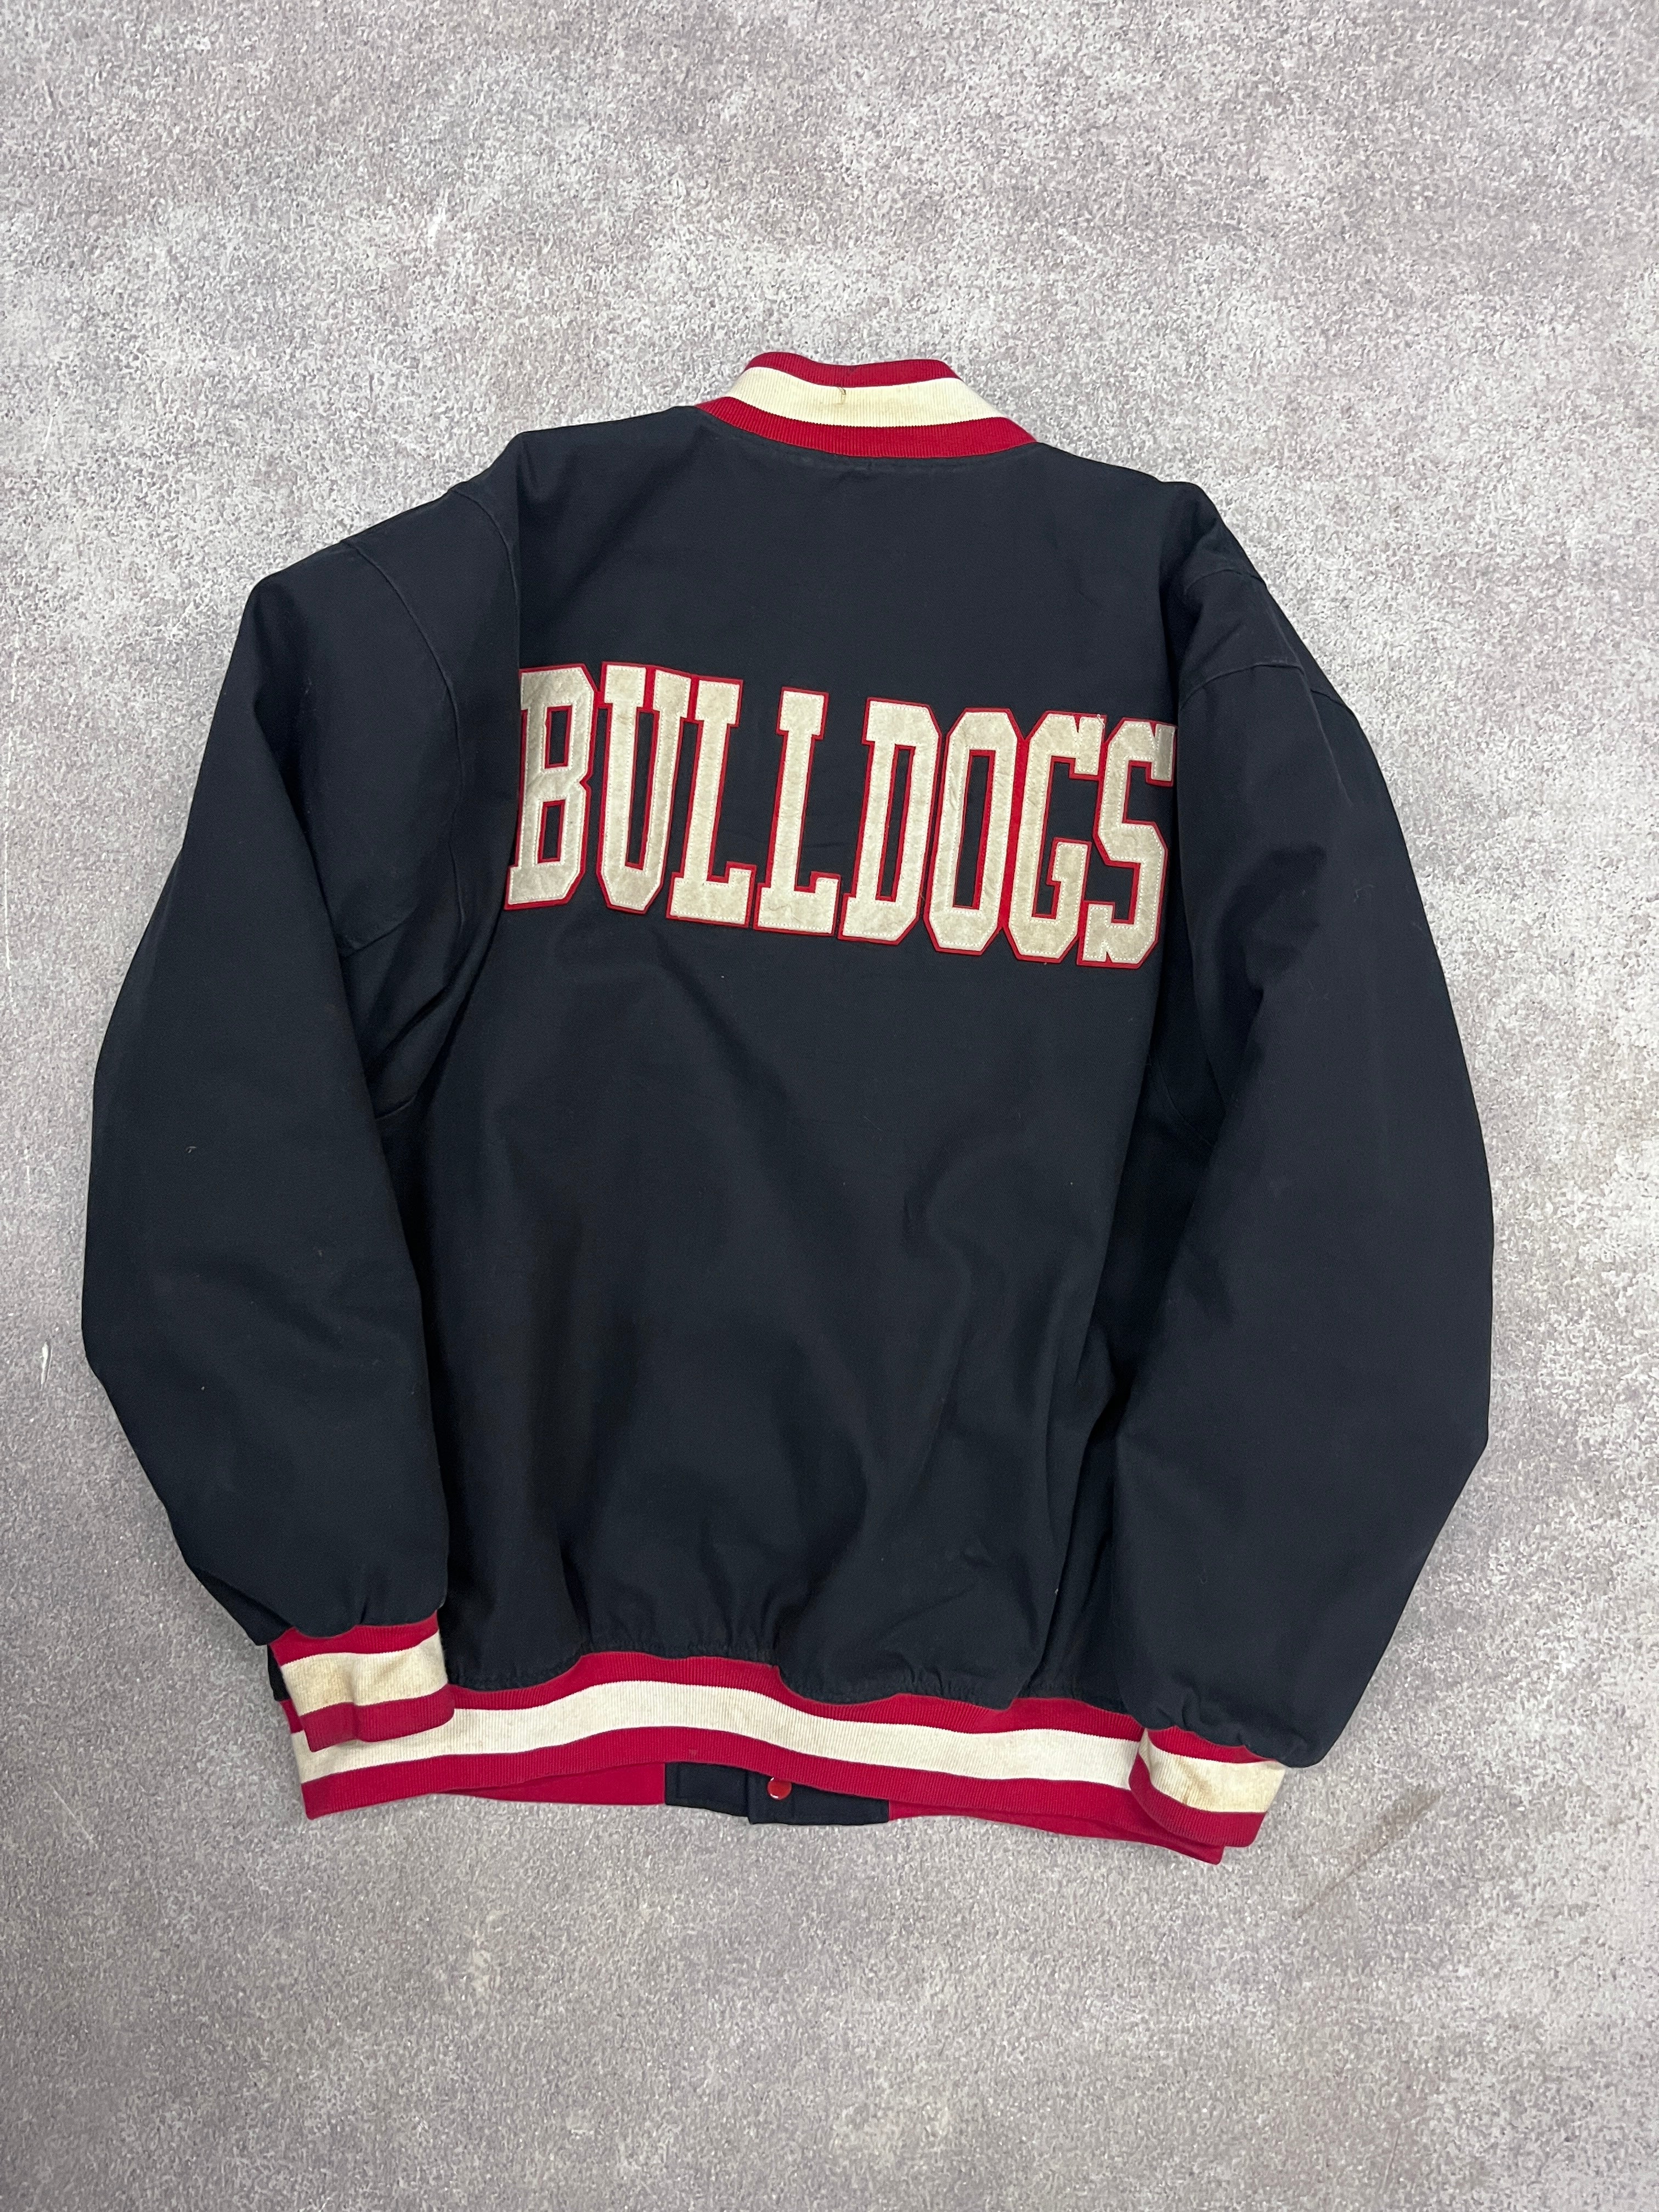 Vintage Bulldogs Varsity Jacket Black // X-Large - RHAGHOUSE VINTAGE